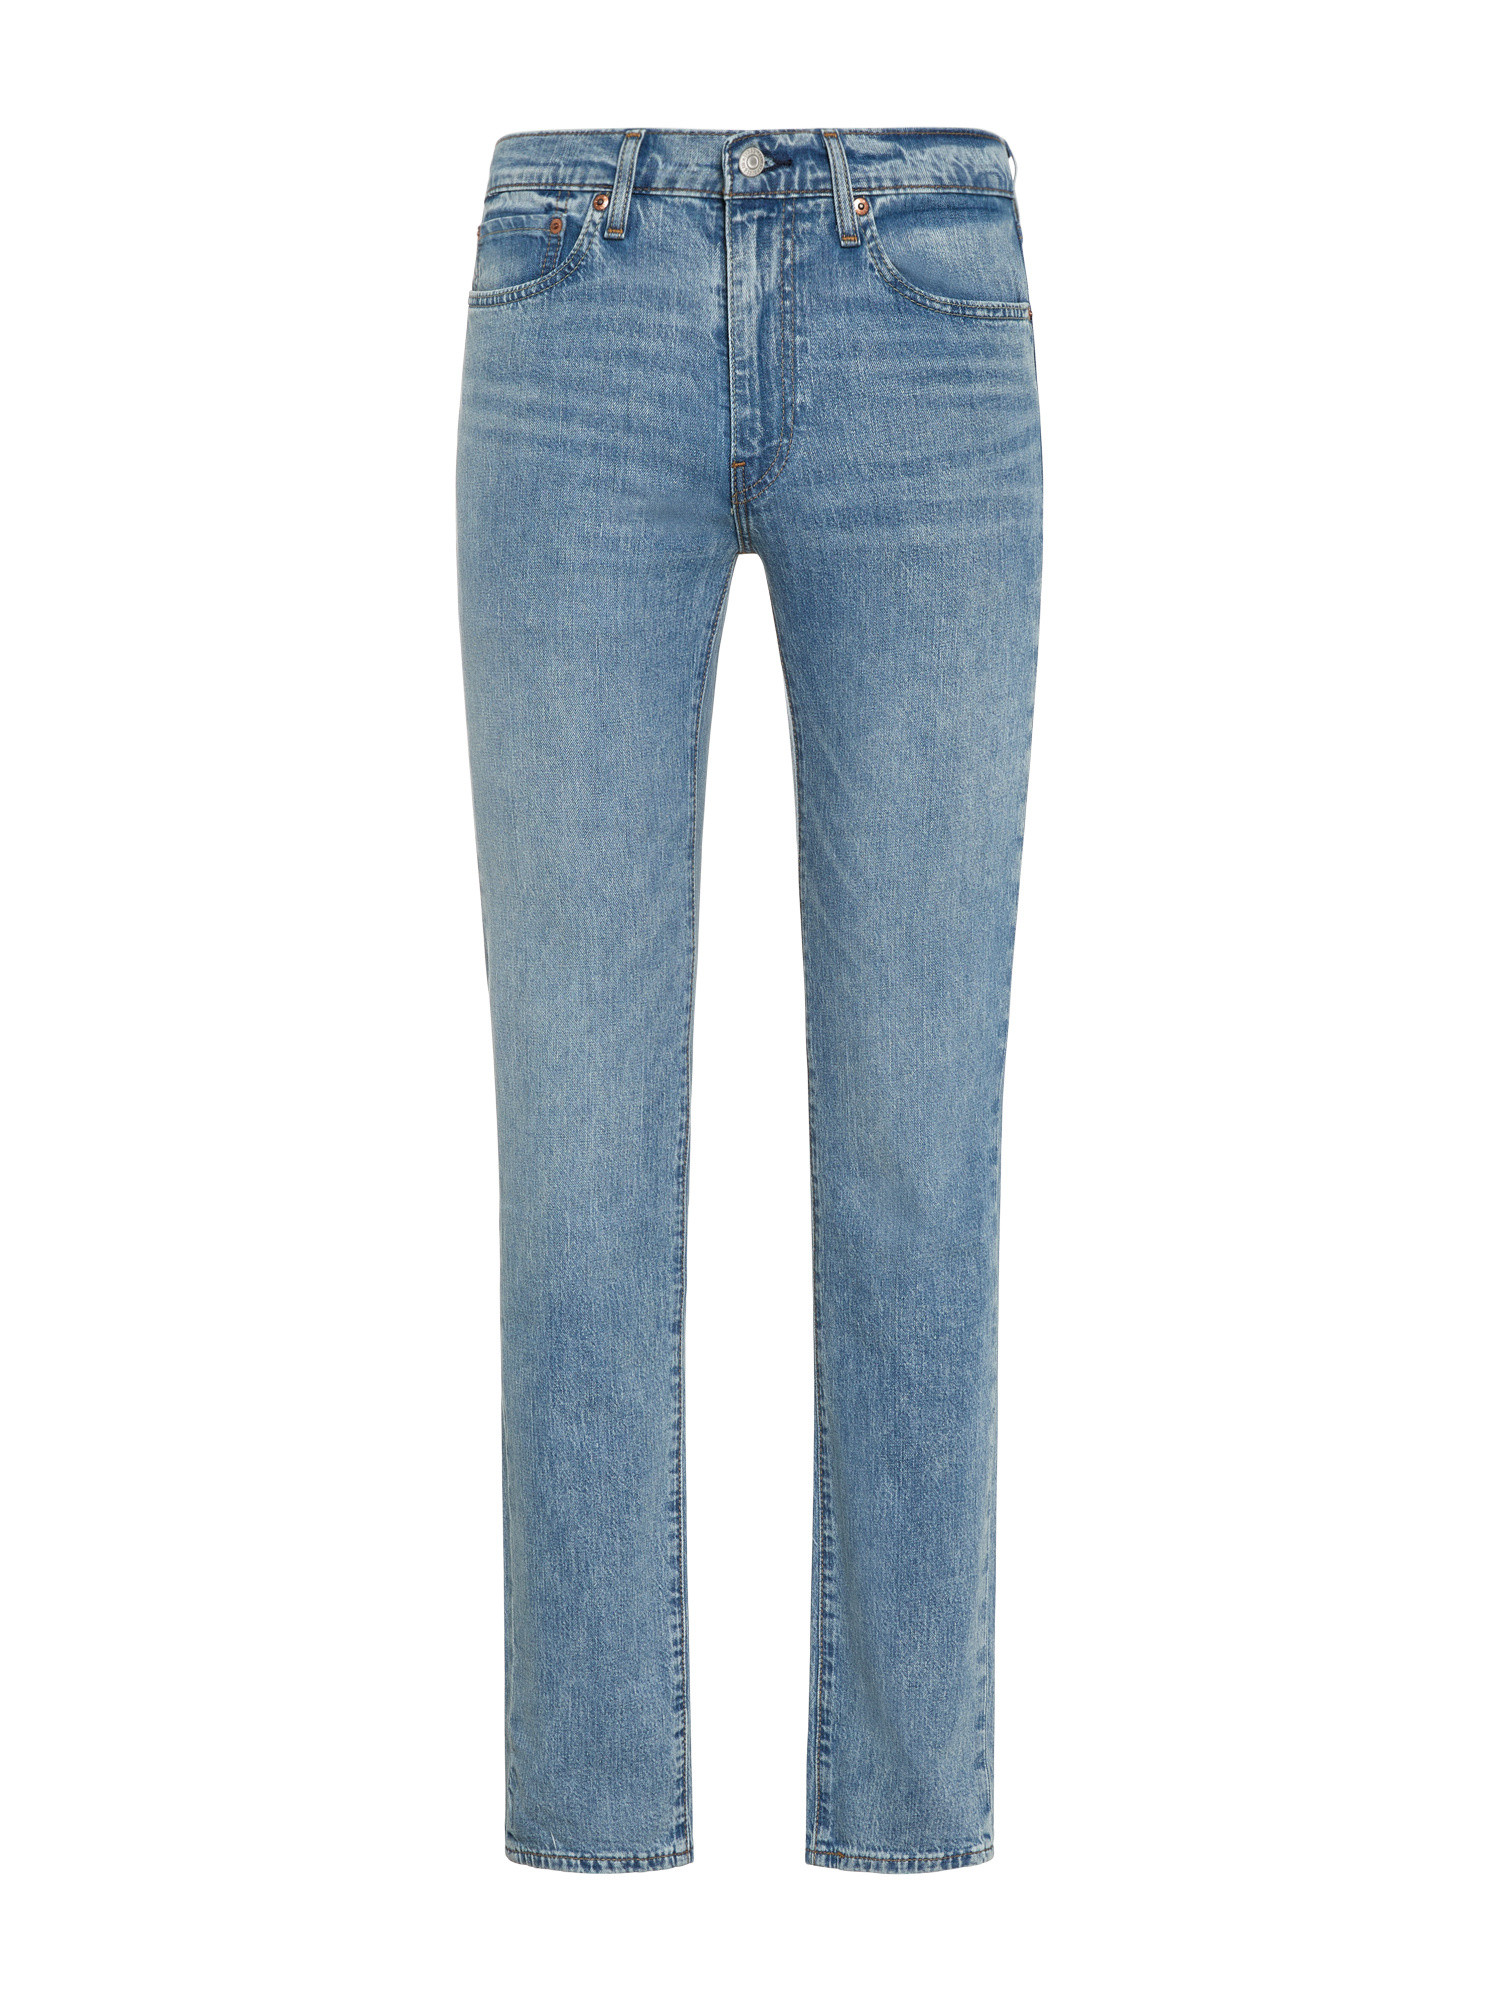 Levi’s - Jeans 511 slim fit, Azzurro, large image number 0